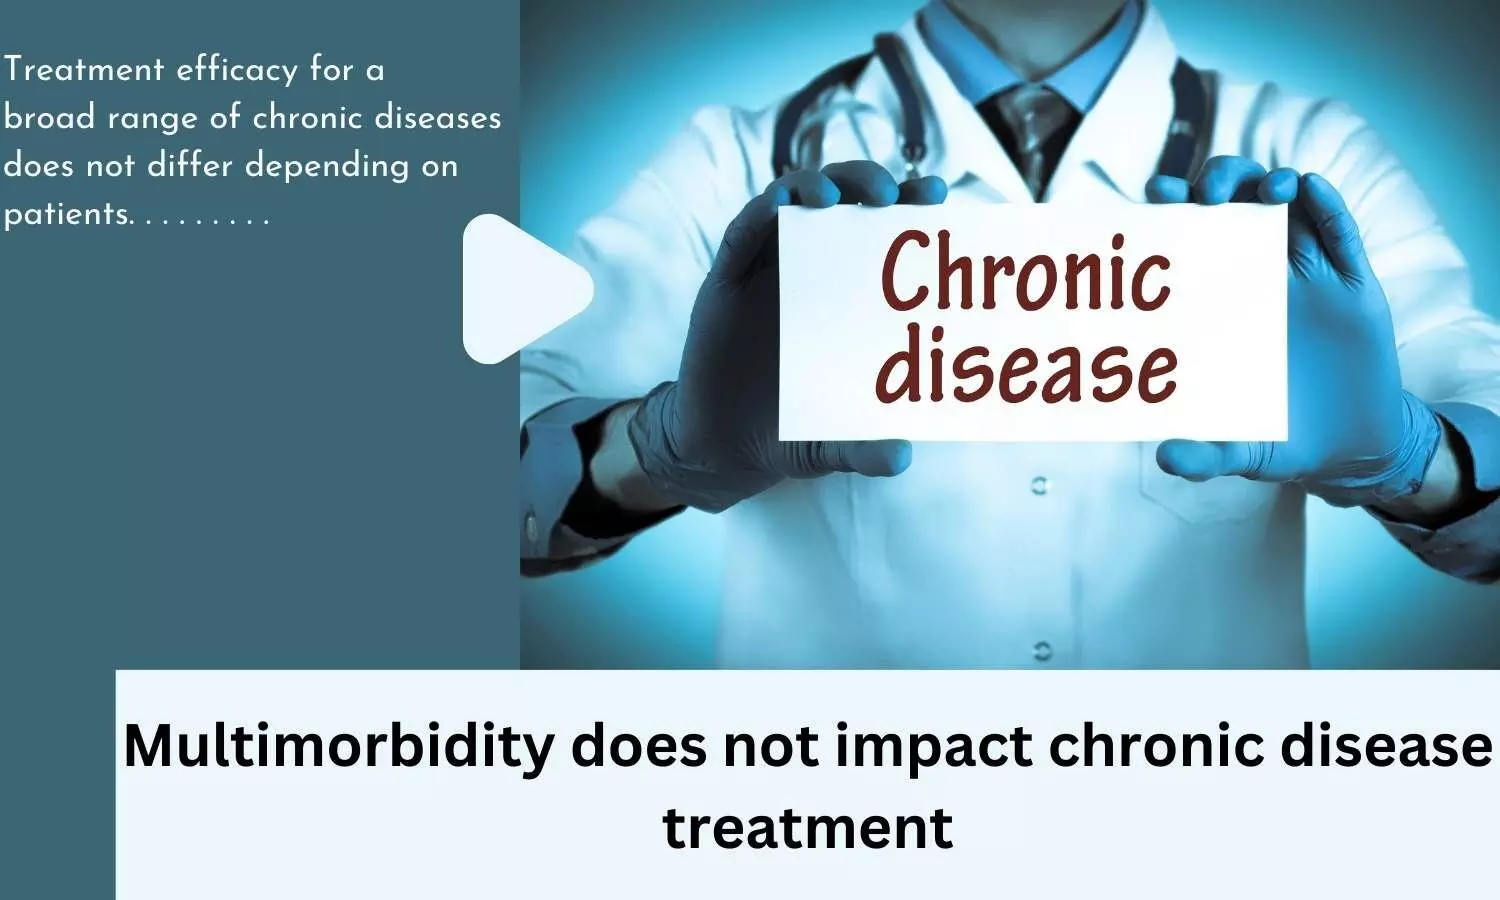 Multimorbidity does not impact chronic disease treatment